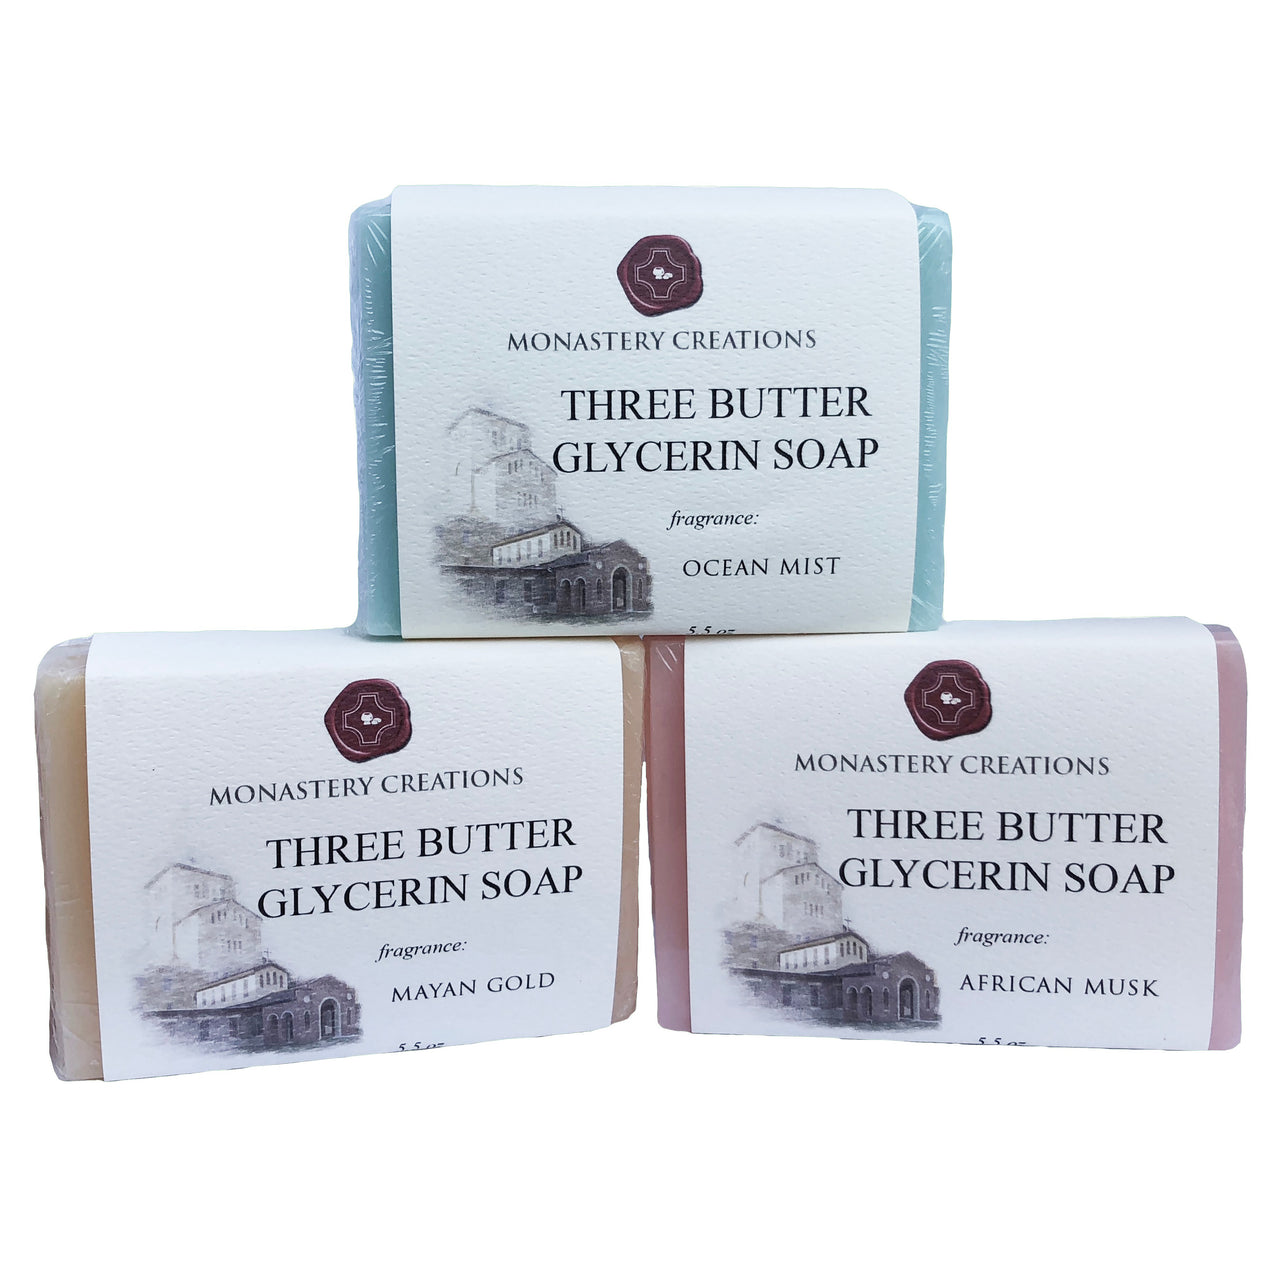 Sister Hope's Premium Three Butter Glycerin Soap Bar – Monastery